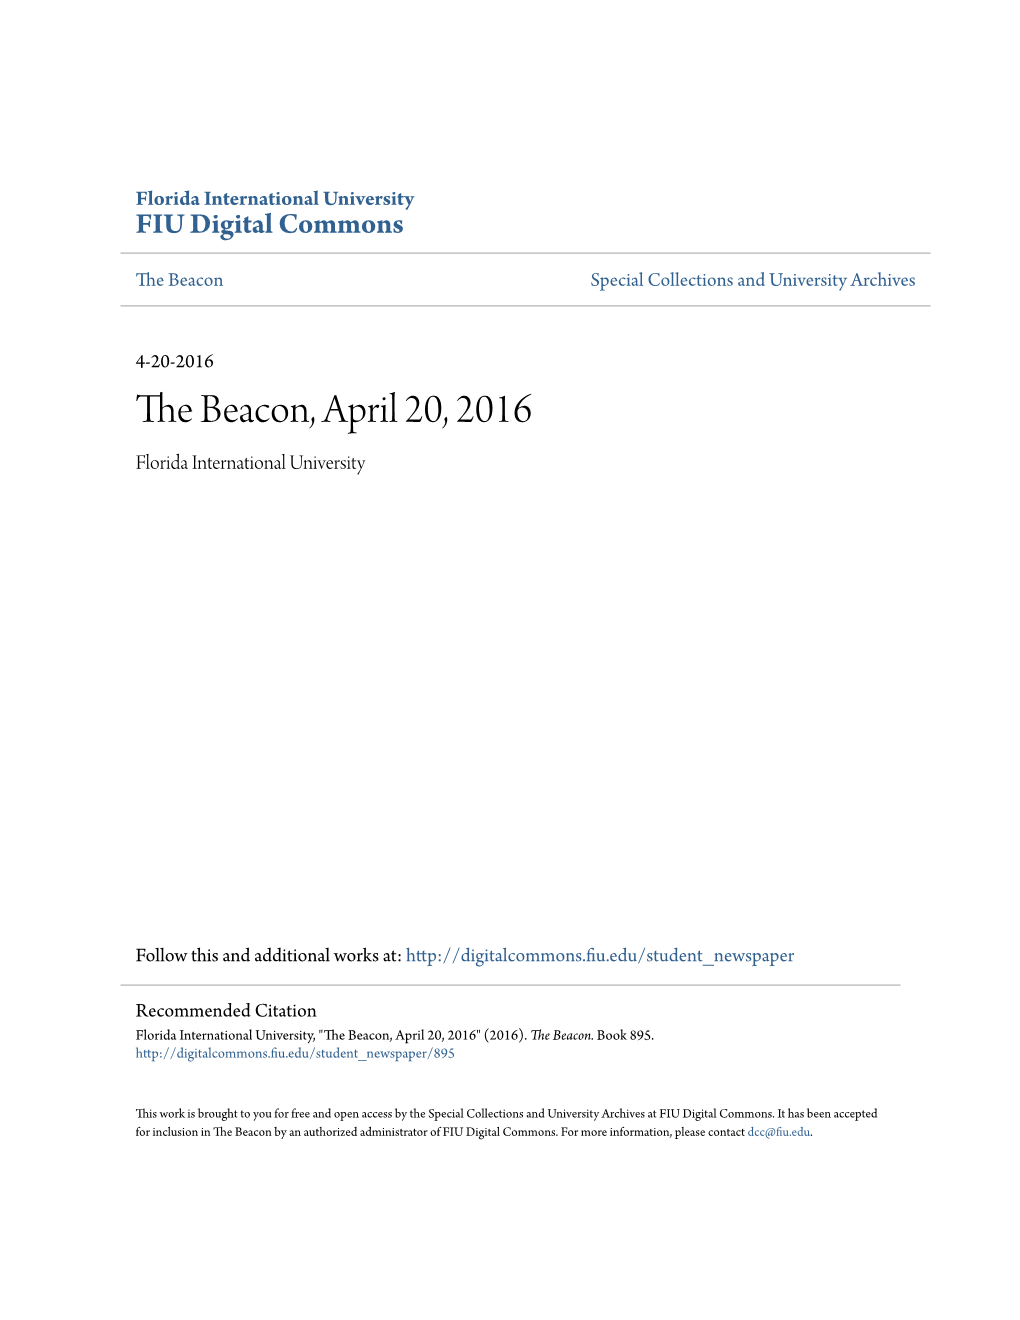 The Beacon, April 20, 2016 Florida International University